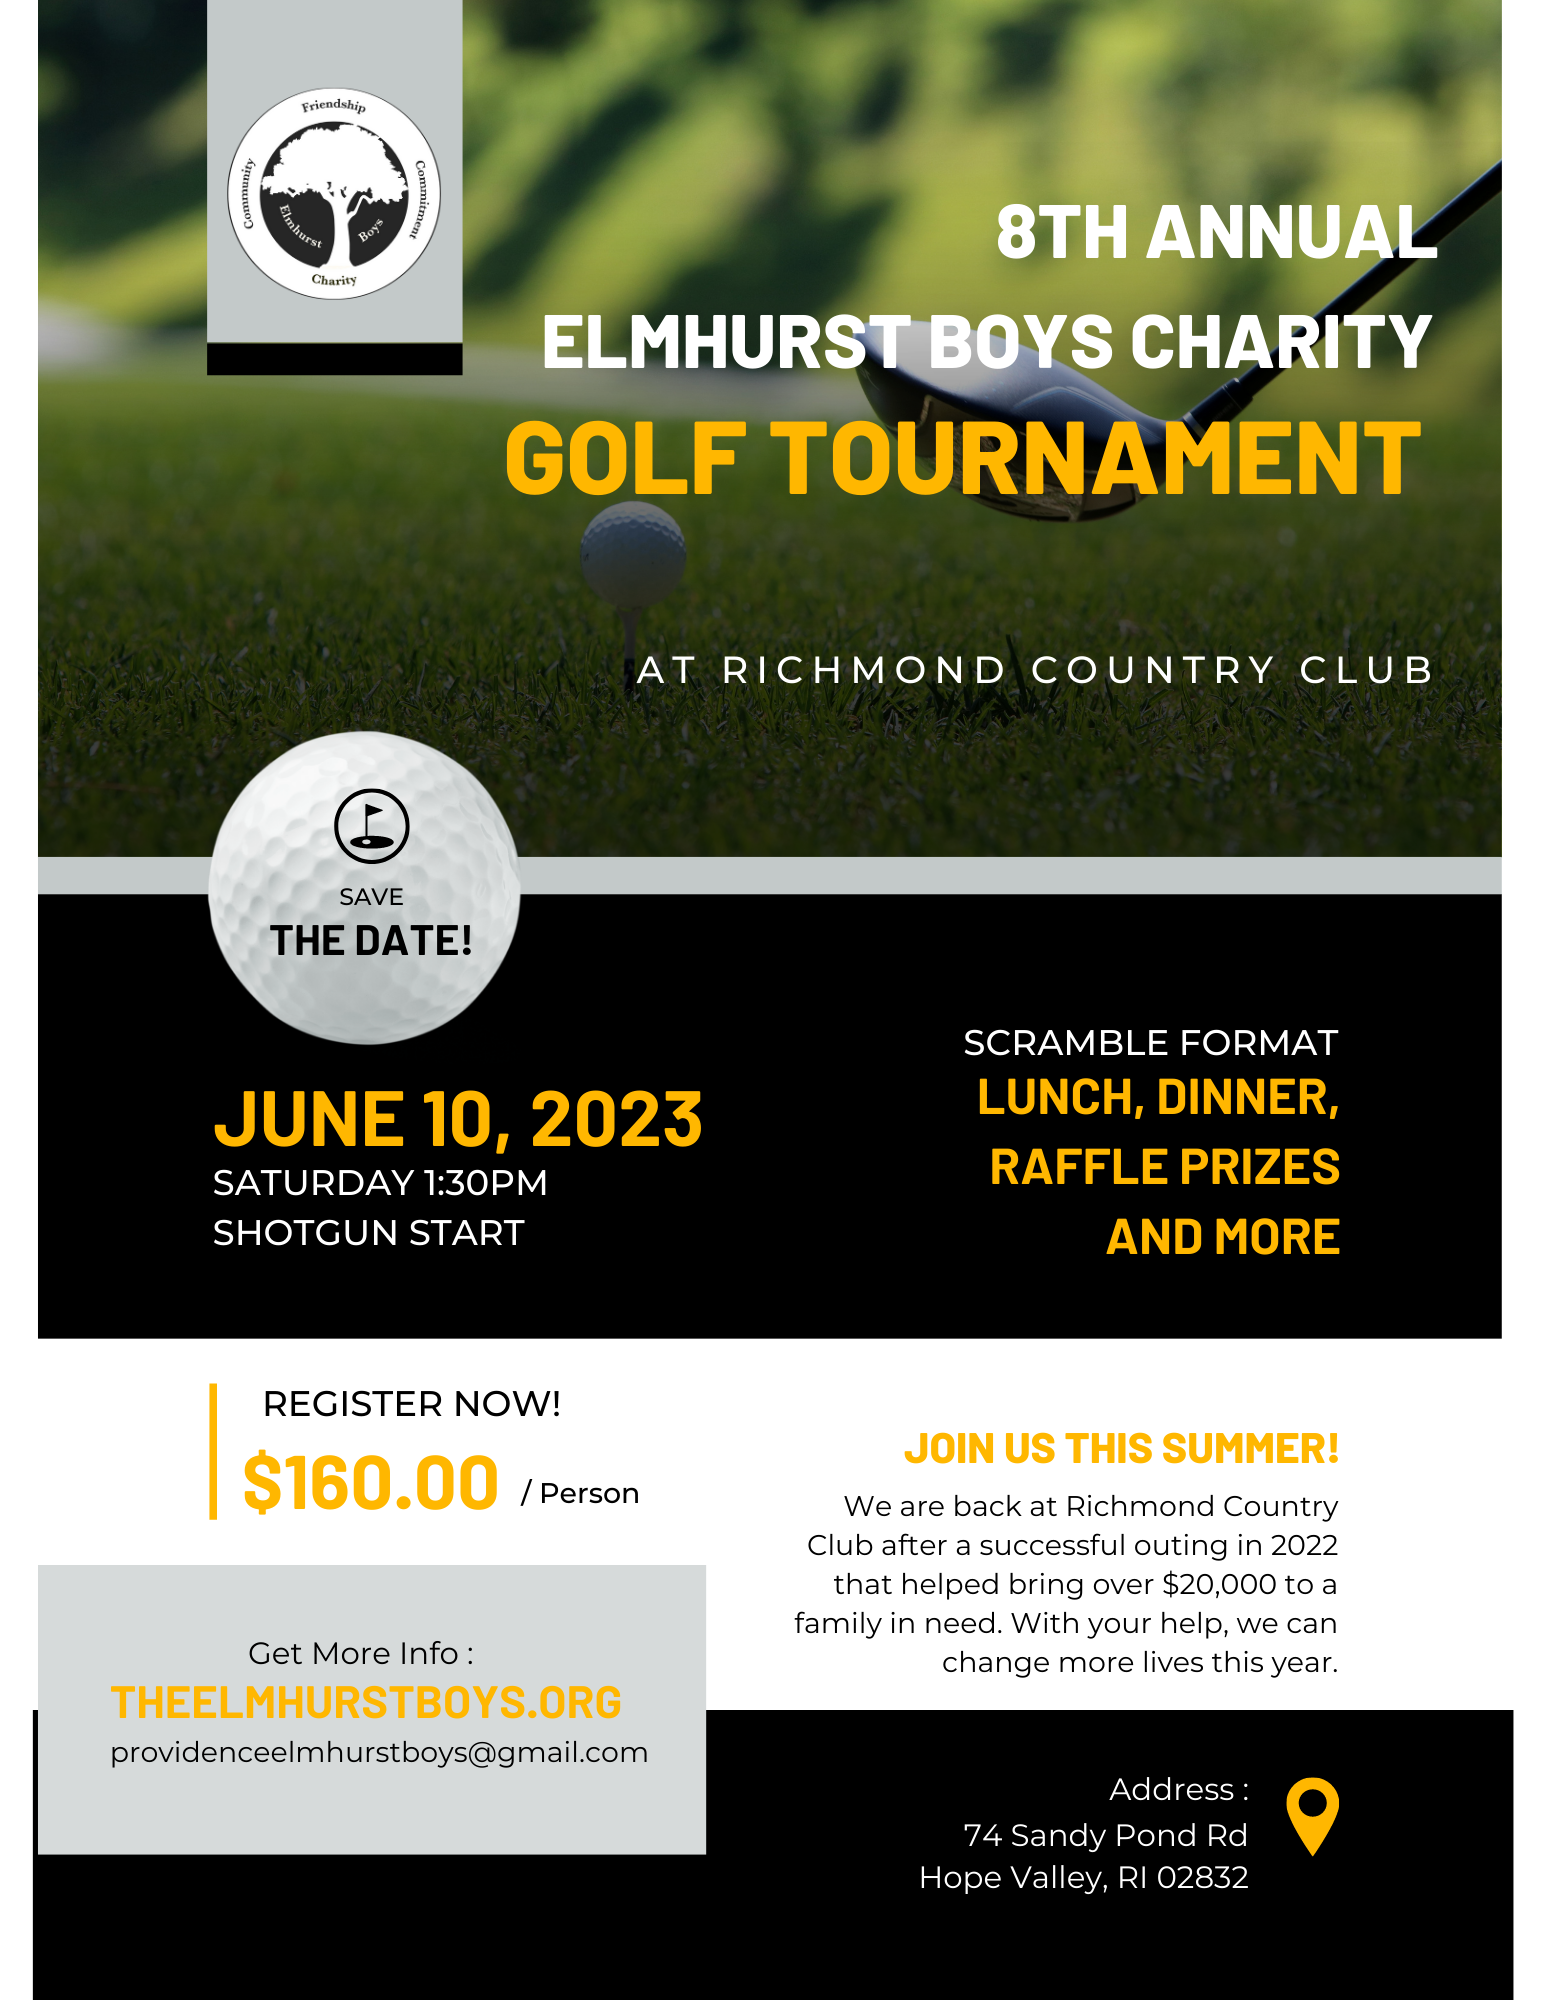 8th Annual Elmhurst Boys Charity Golf Tournament